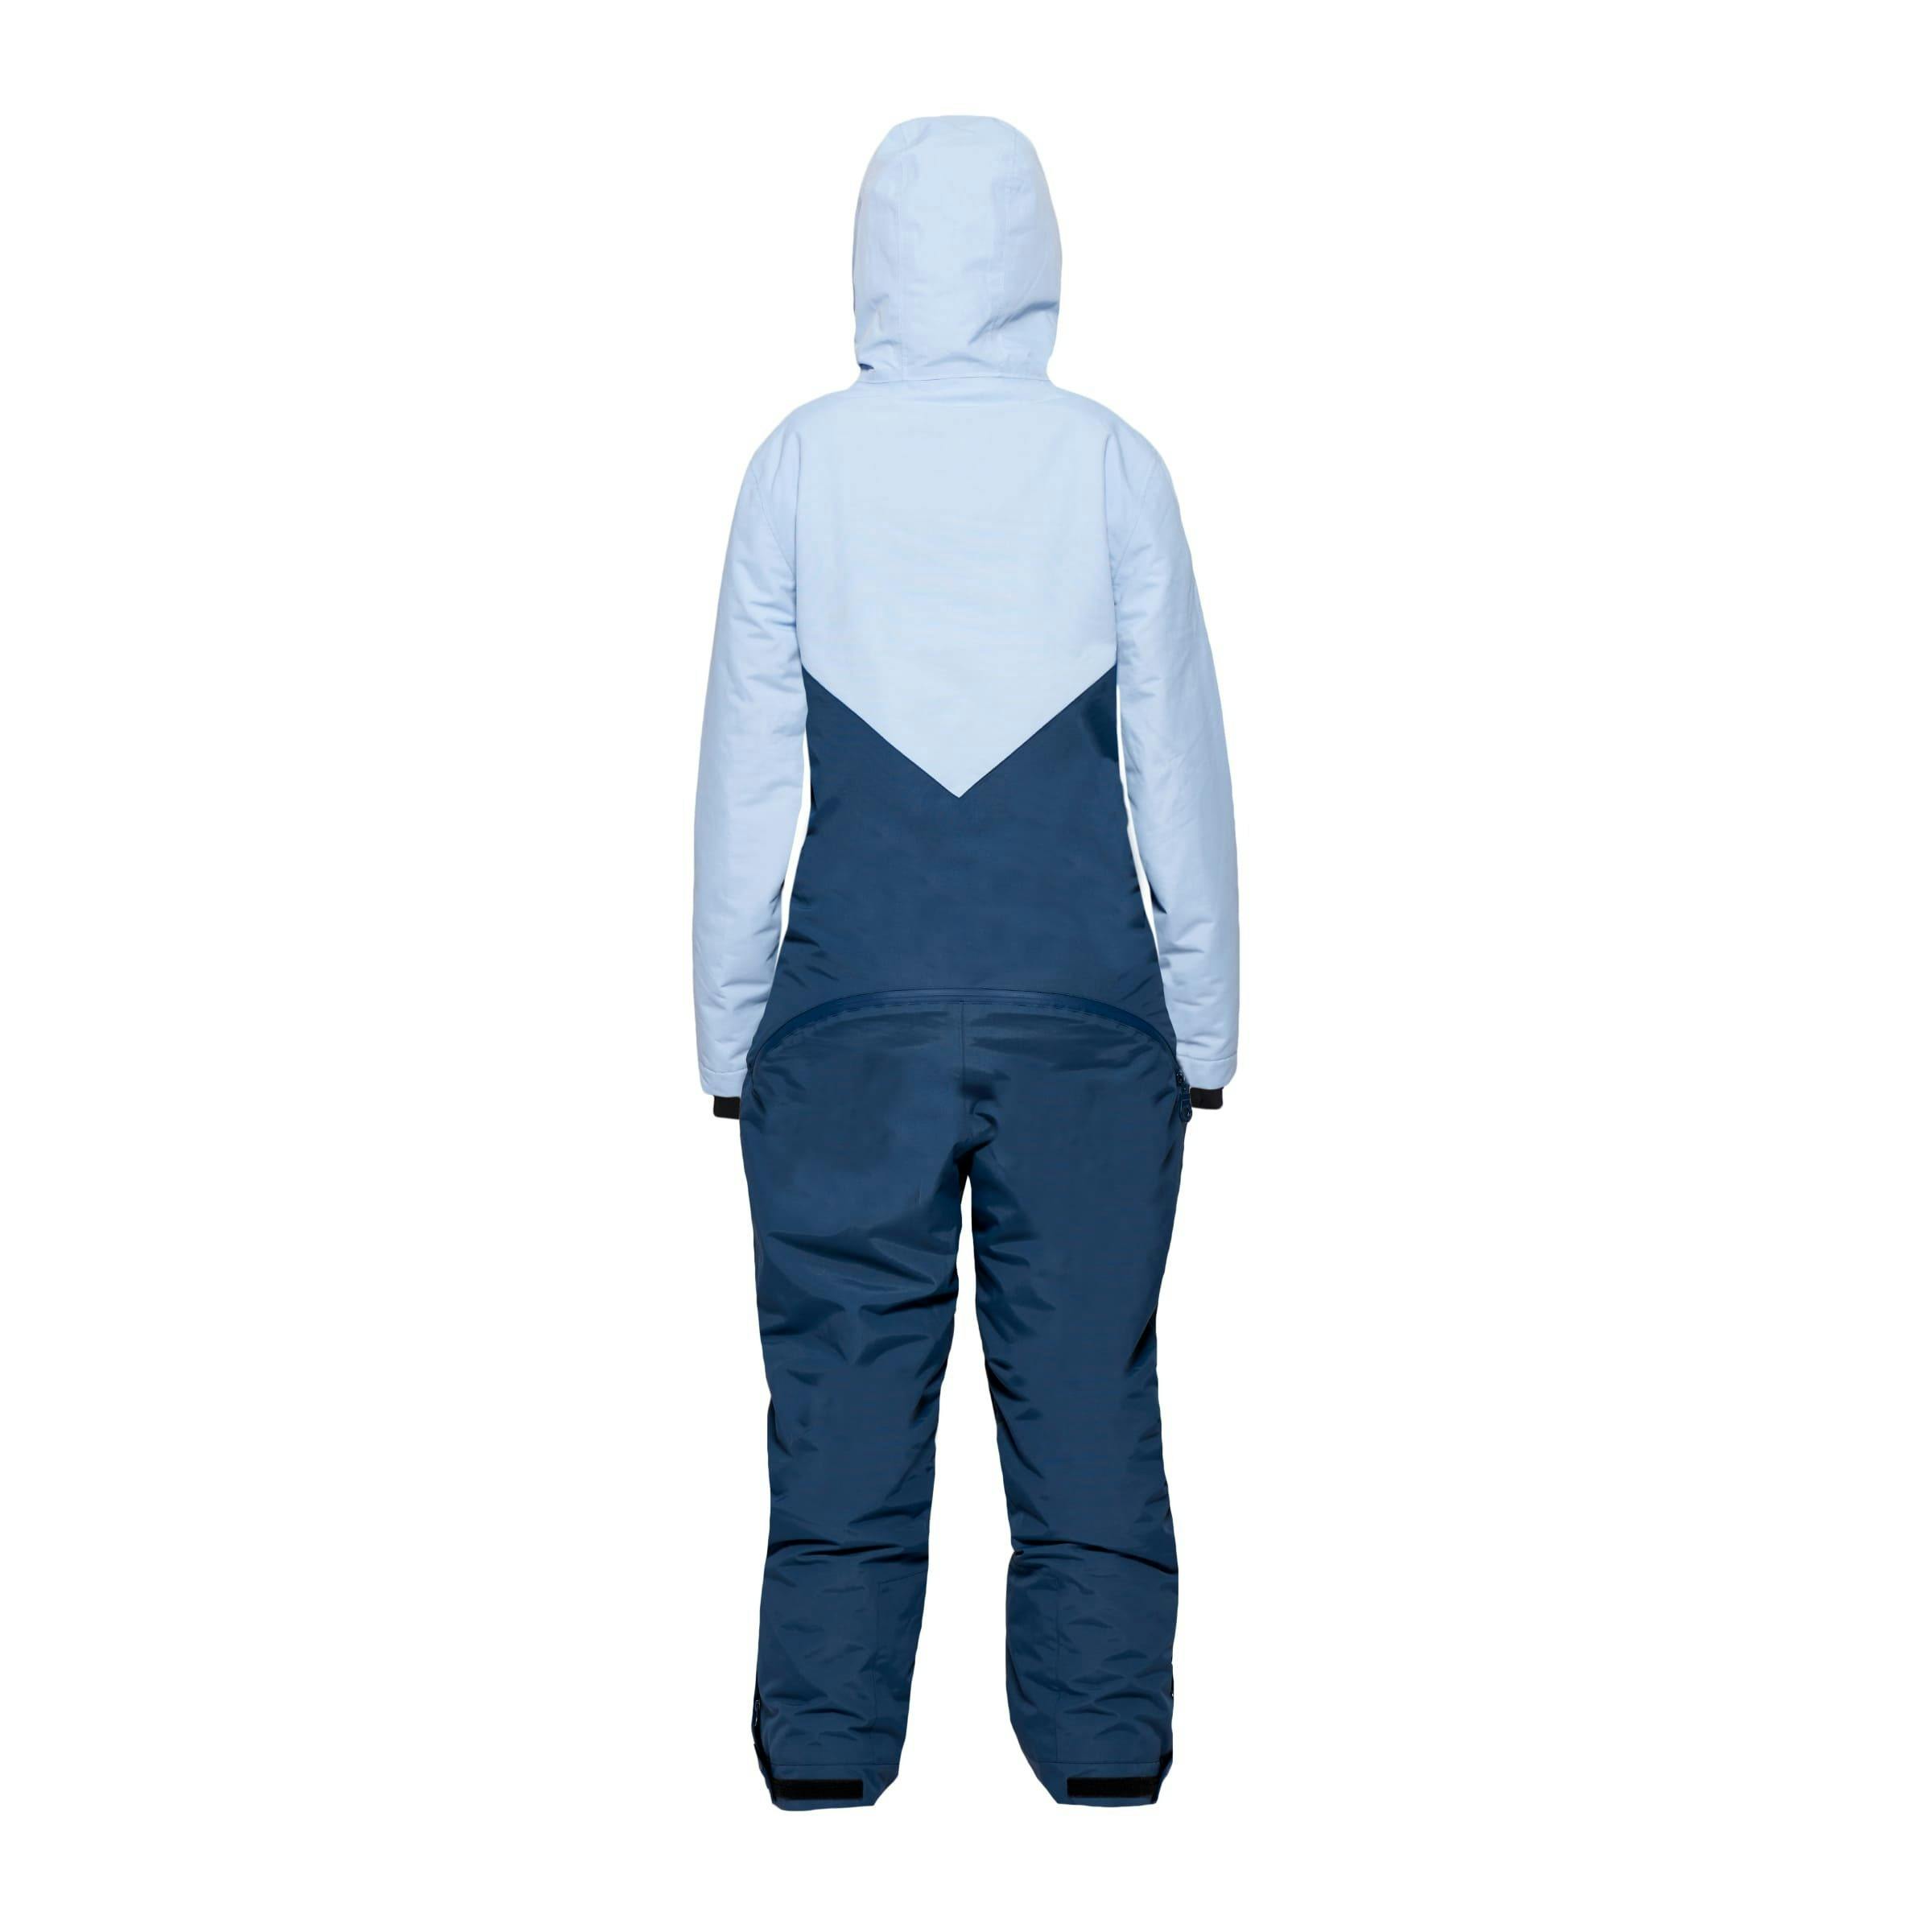 Oneskee Women's Mark VII Snowsuit